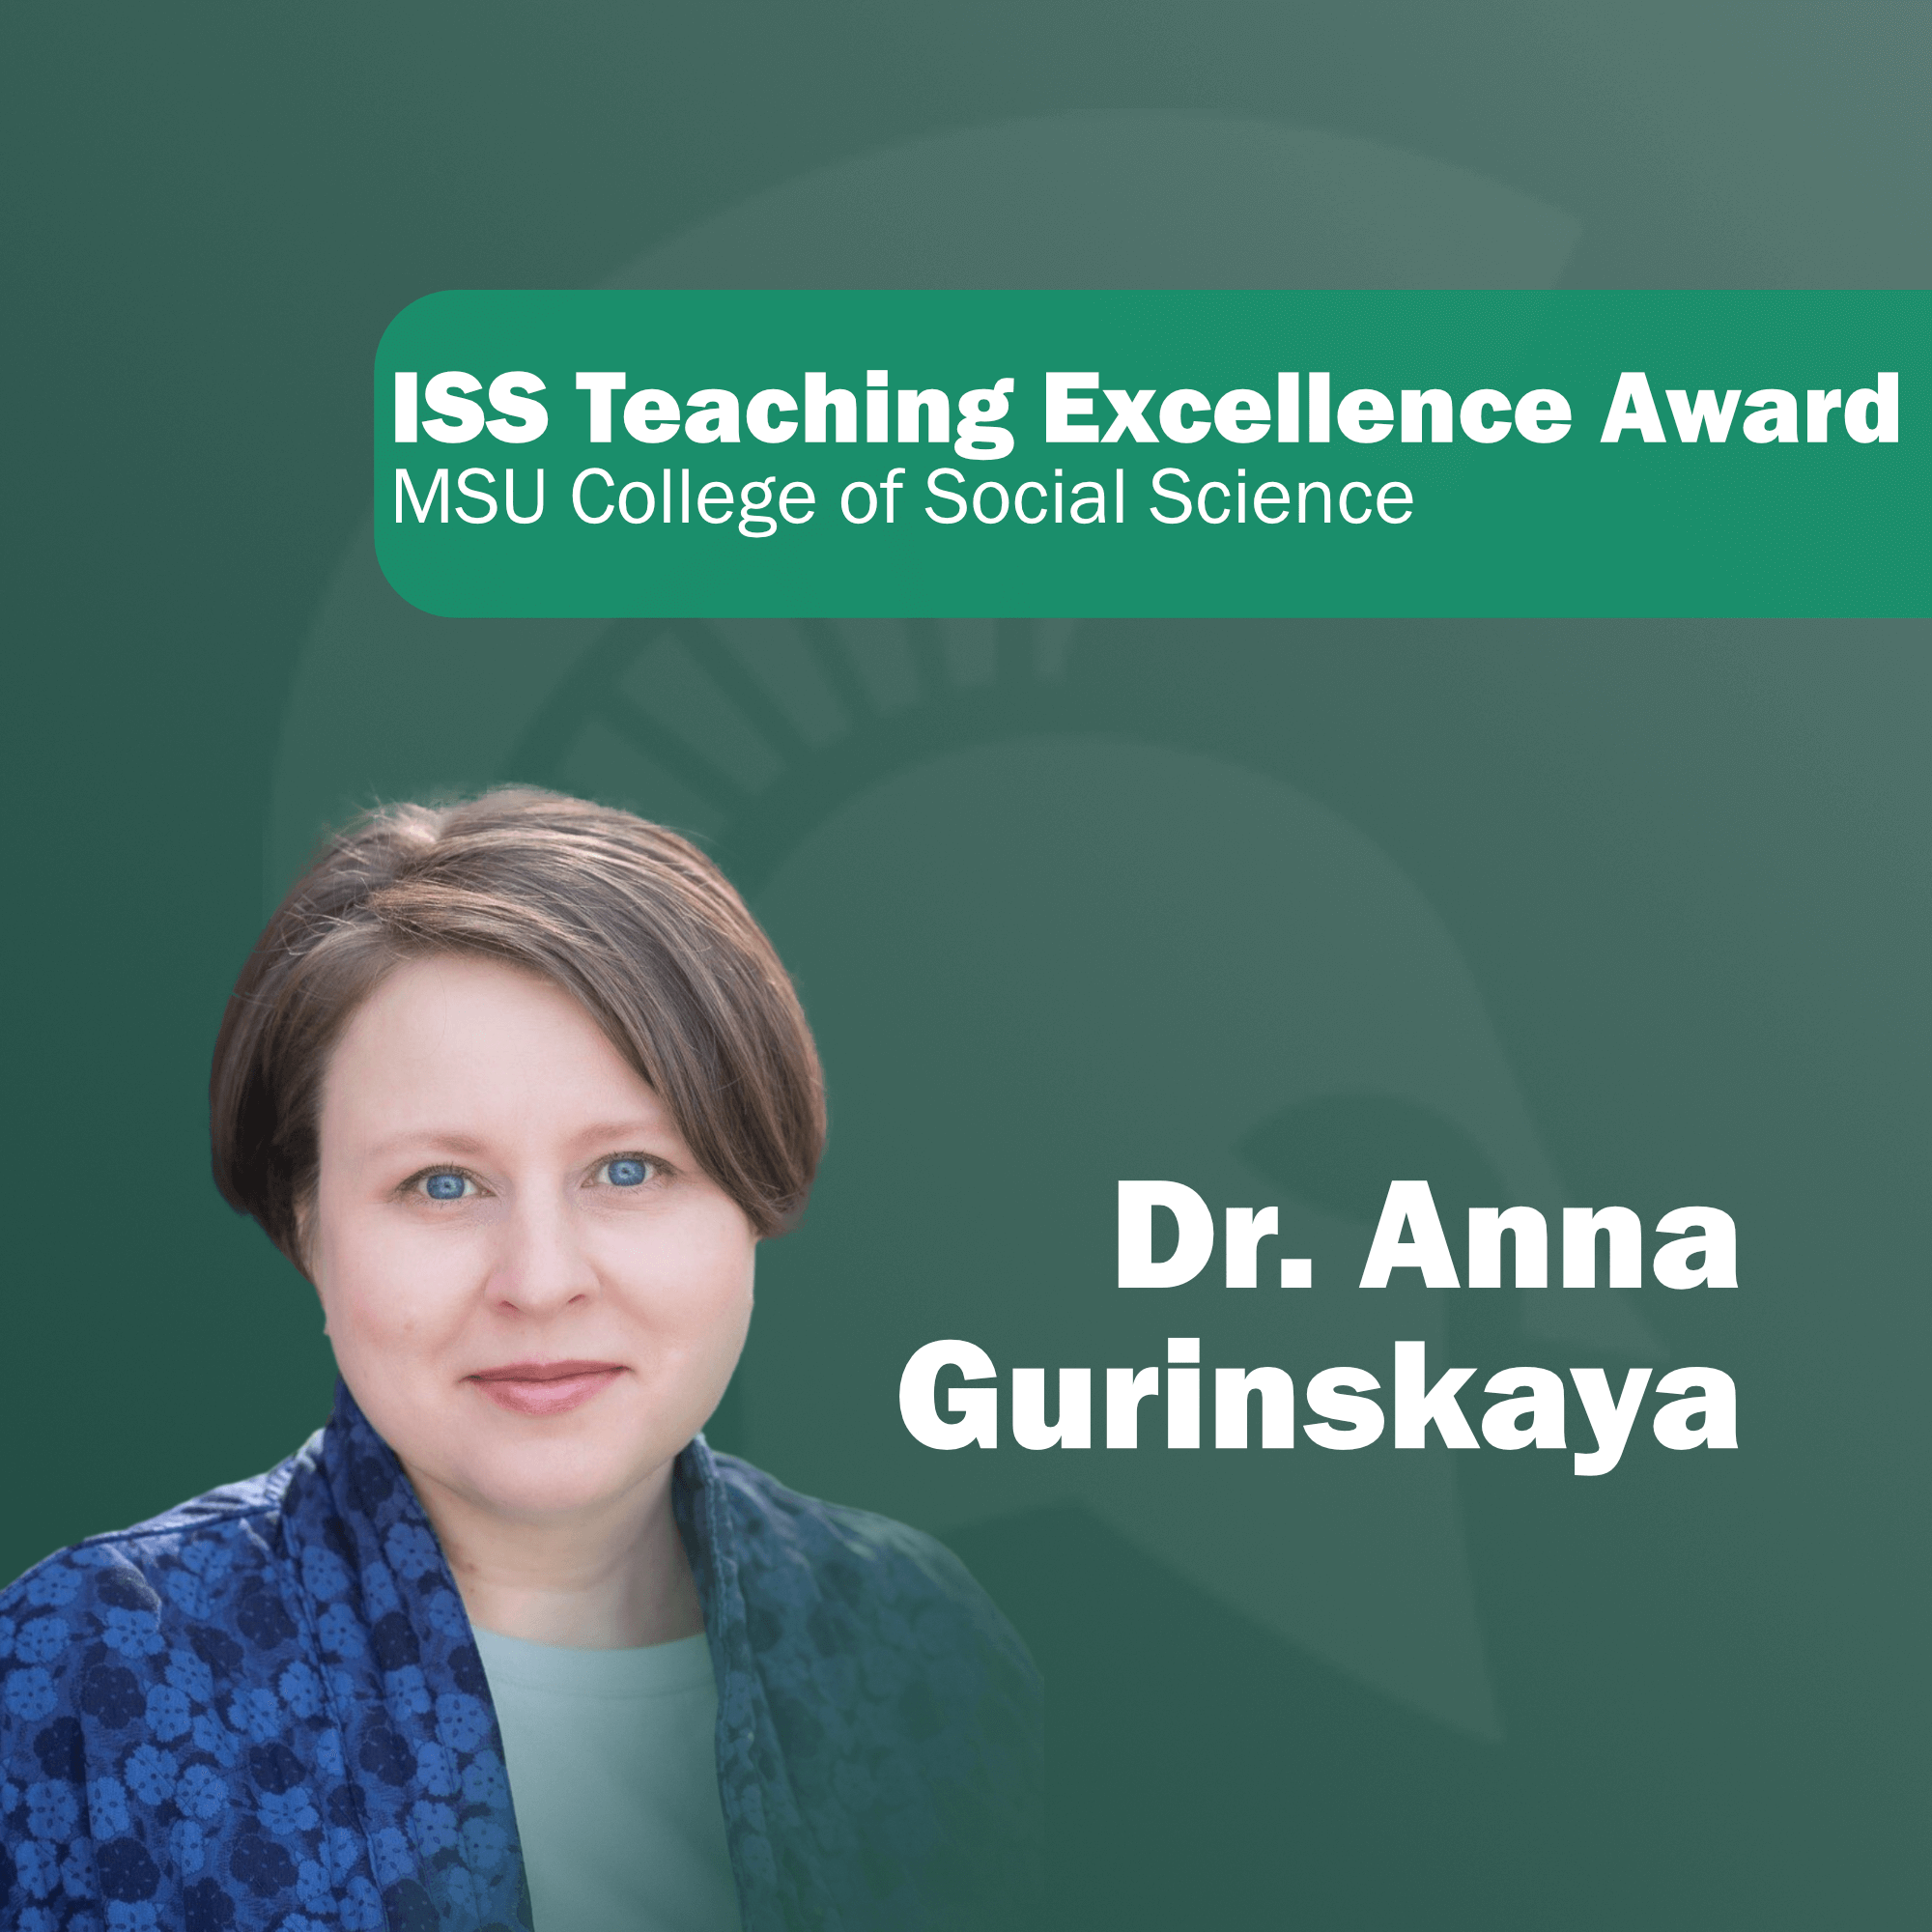 Dr. Gurinskaya Receives Teaching Excellence Award